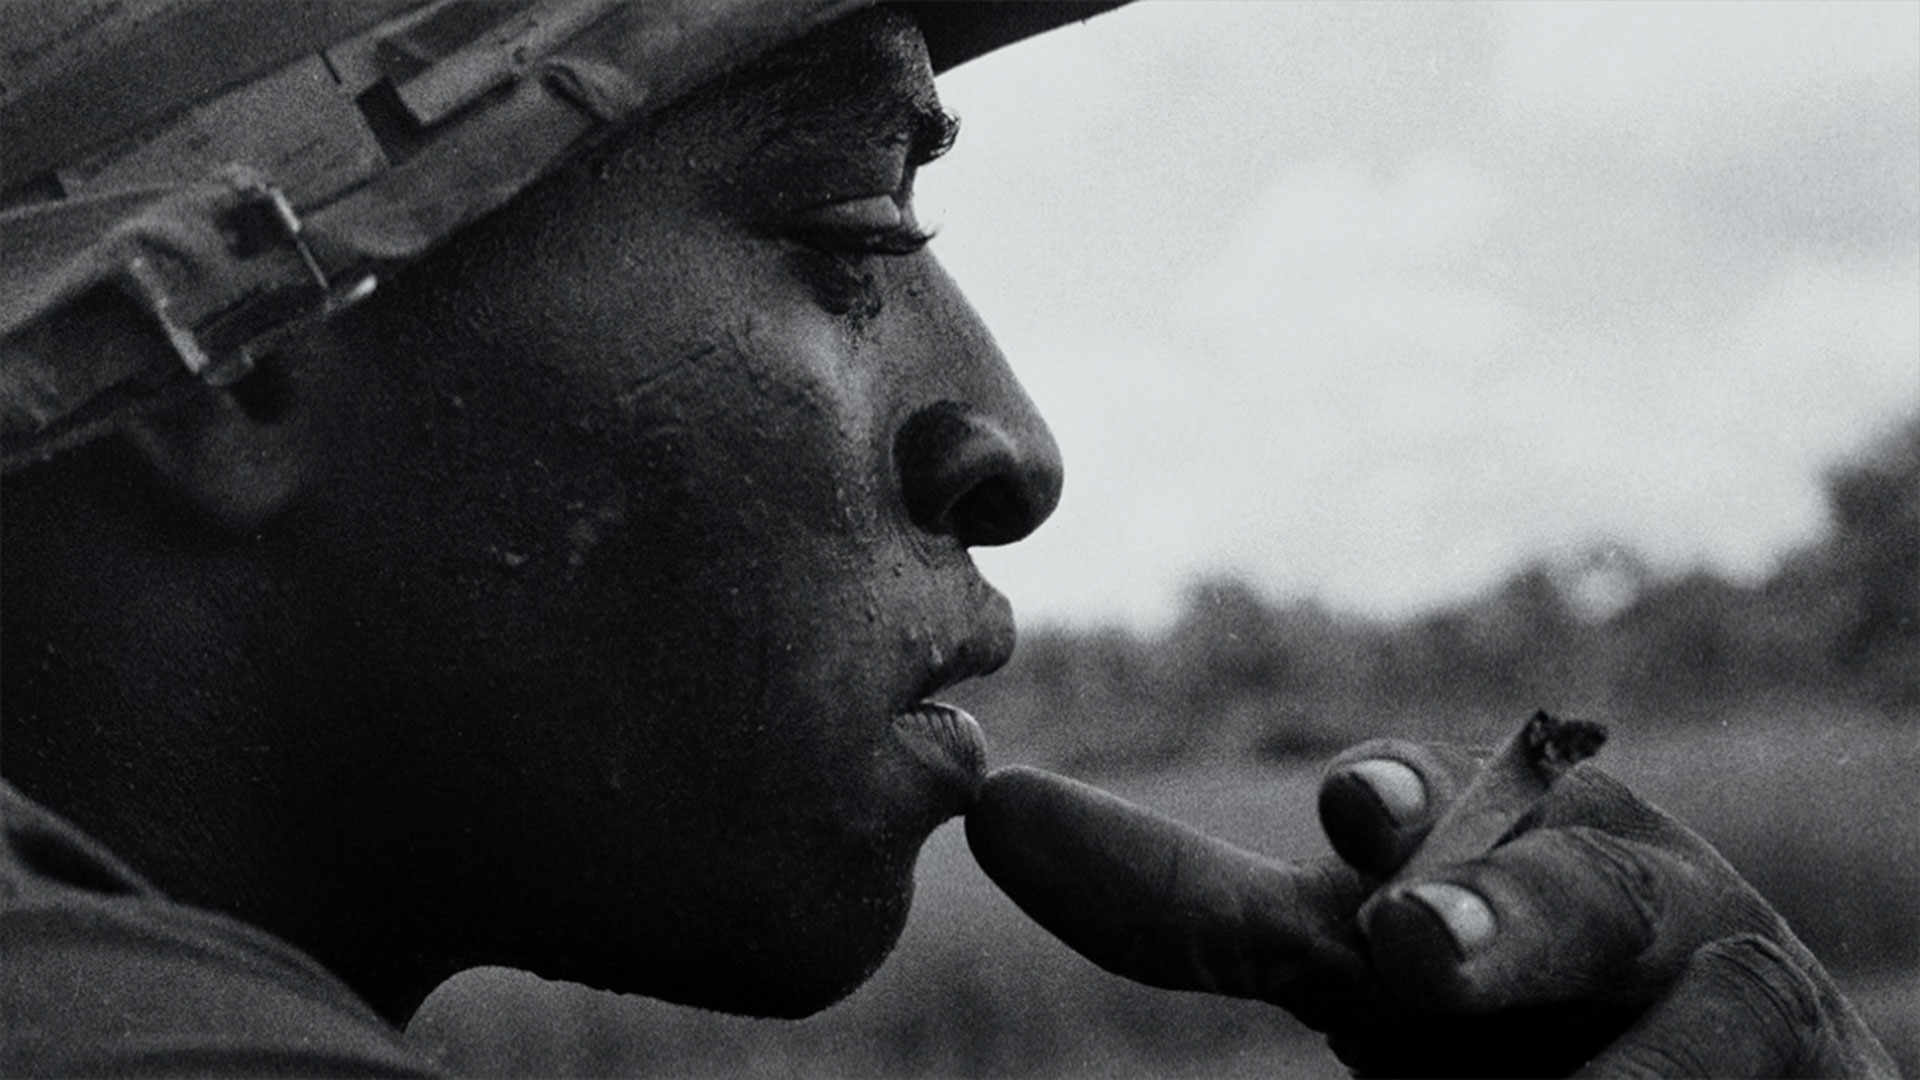 reflections_vietnam_soldier_smoking_hero